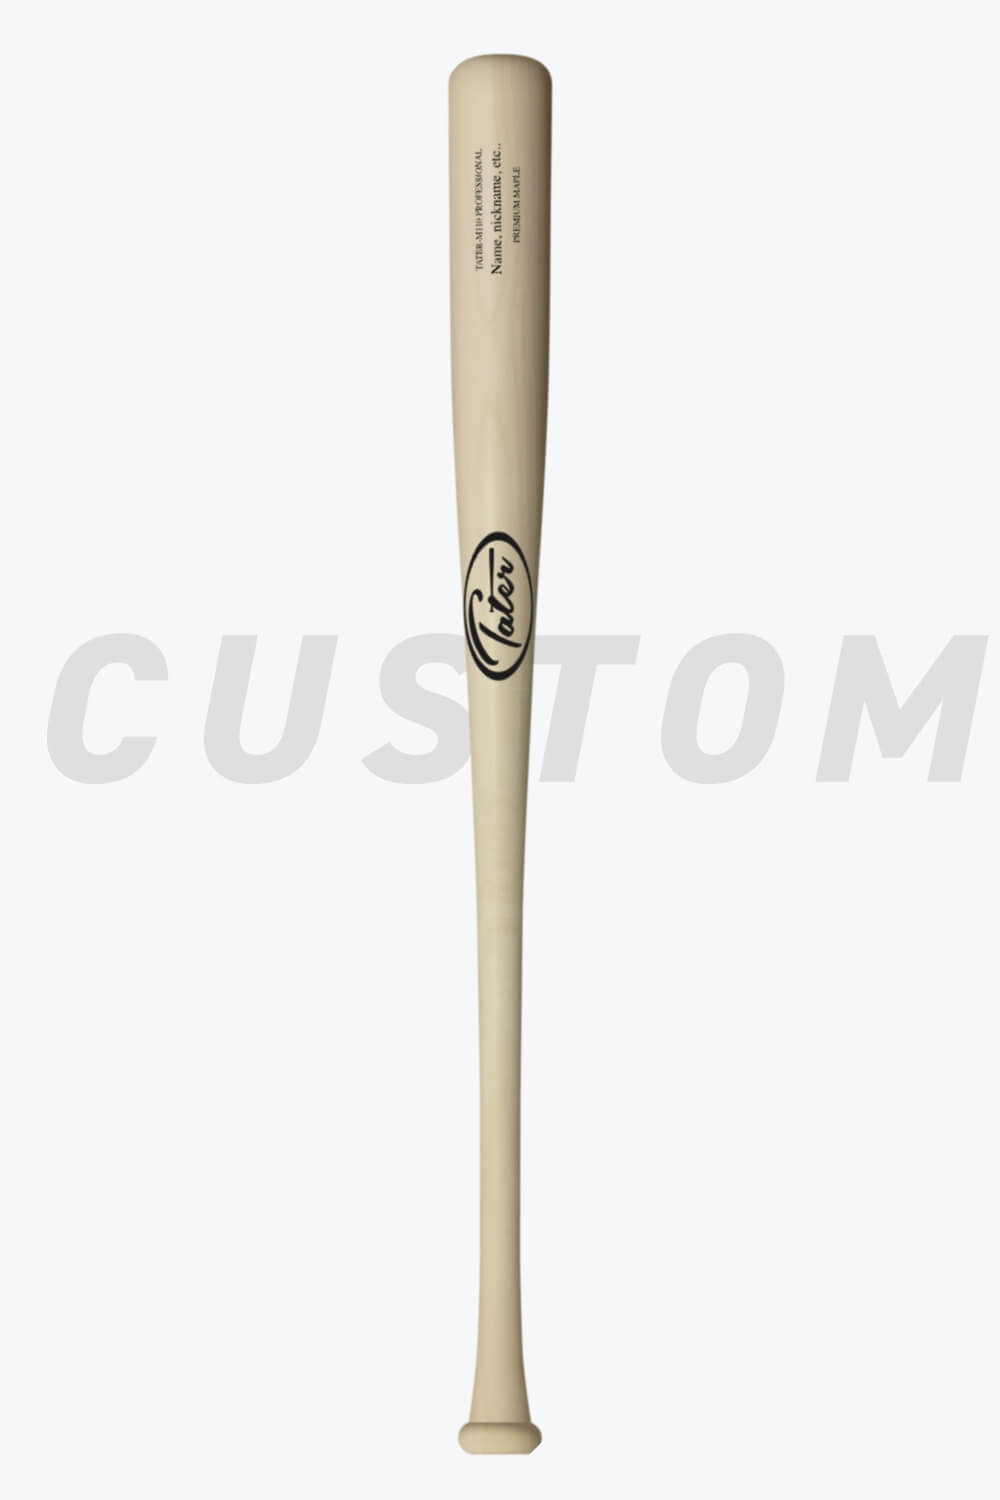 Louisville Slugger Select Cut I13 Maple Wood Baseball Bat for sale online